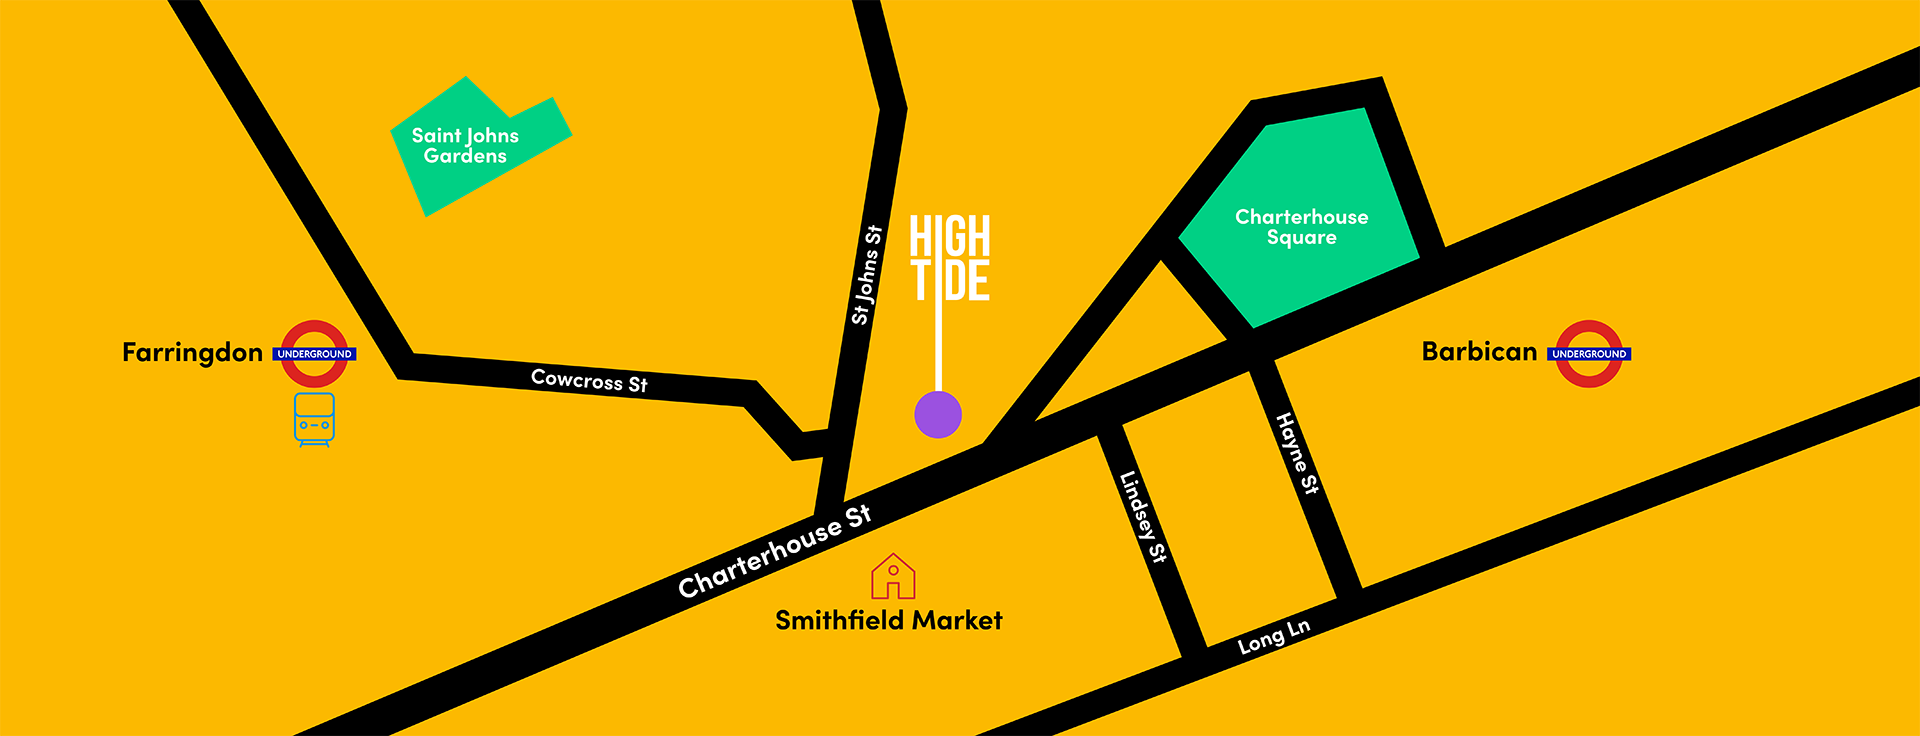 A map showing High Tide's location in London, off Chaterhouse Street near the Smithfield Market.